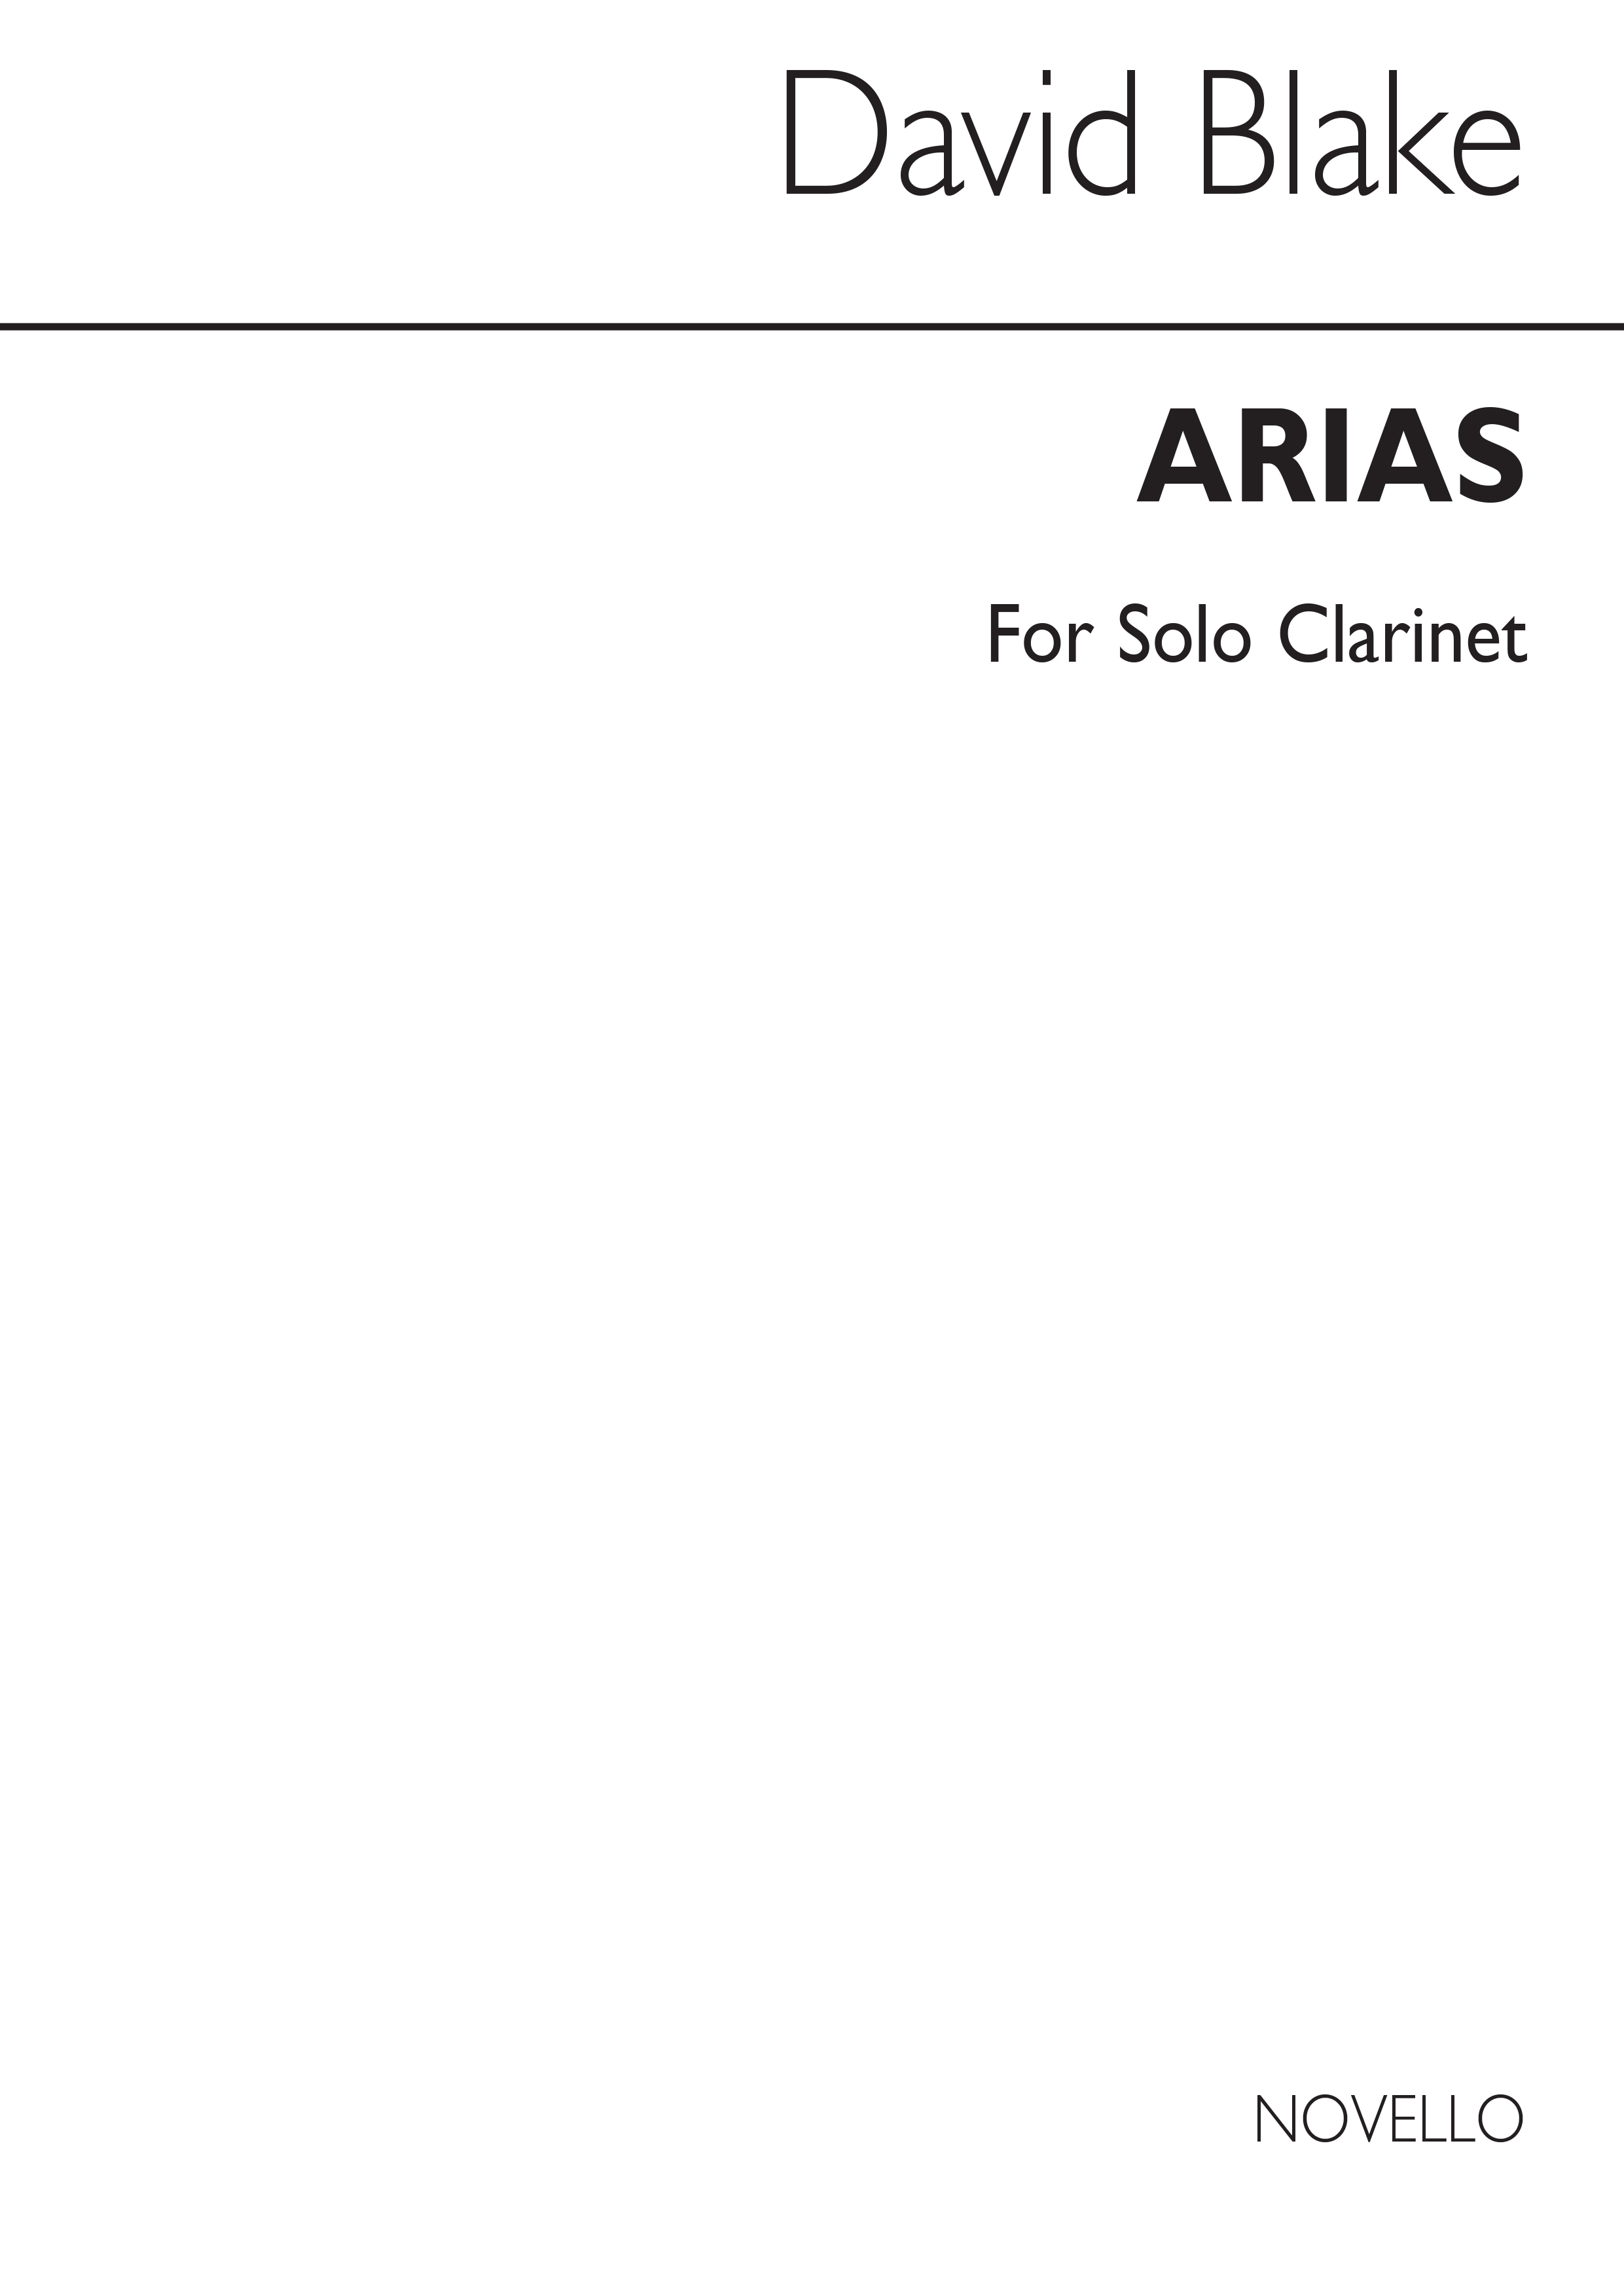 David Blake: Arias for Clarinet Solo